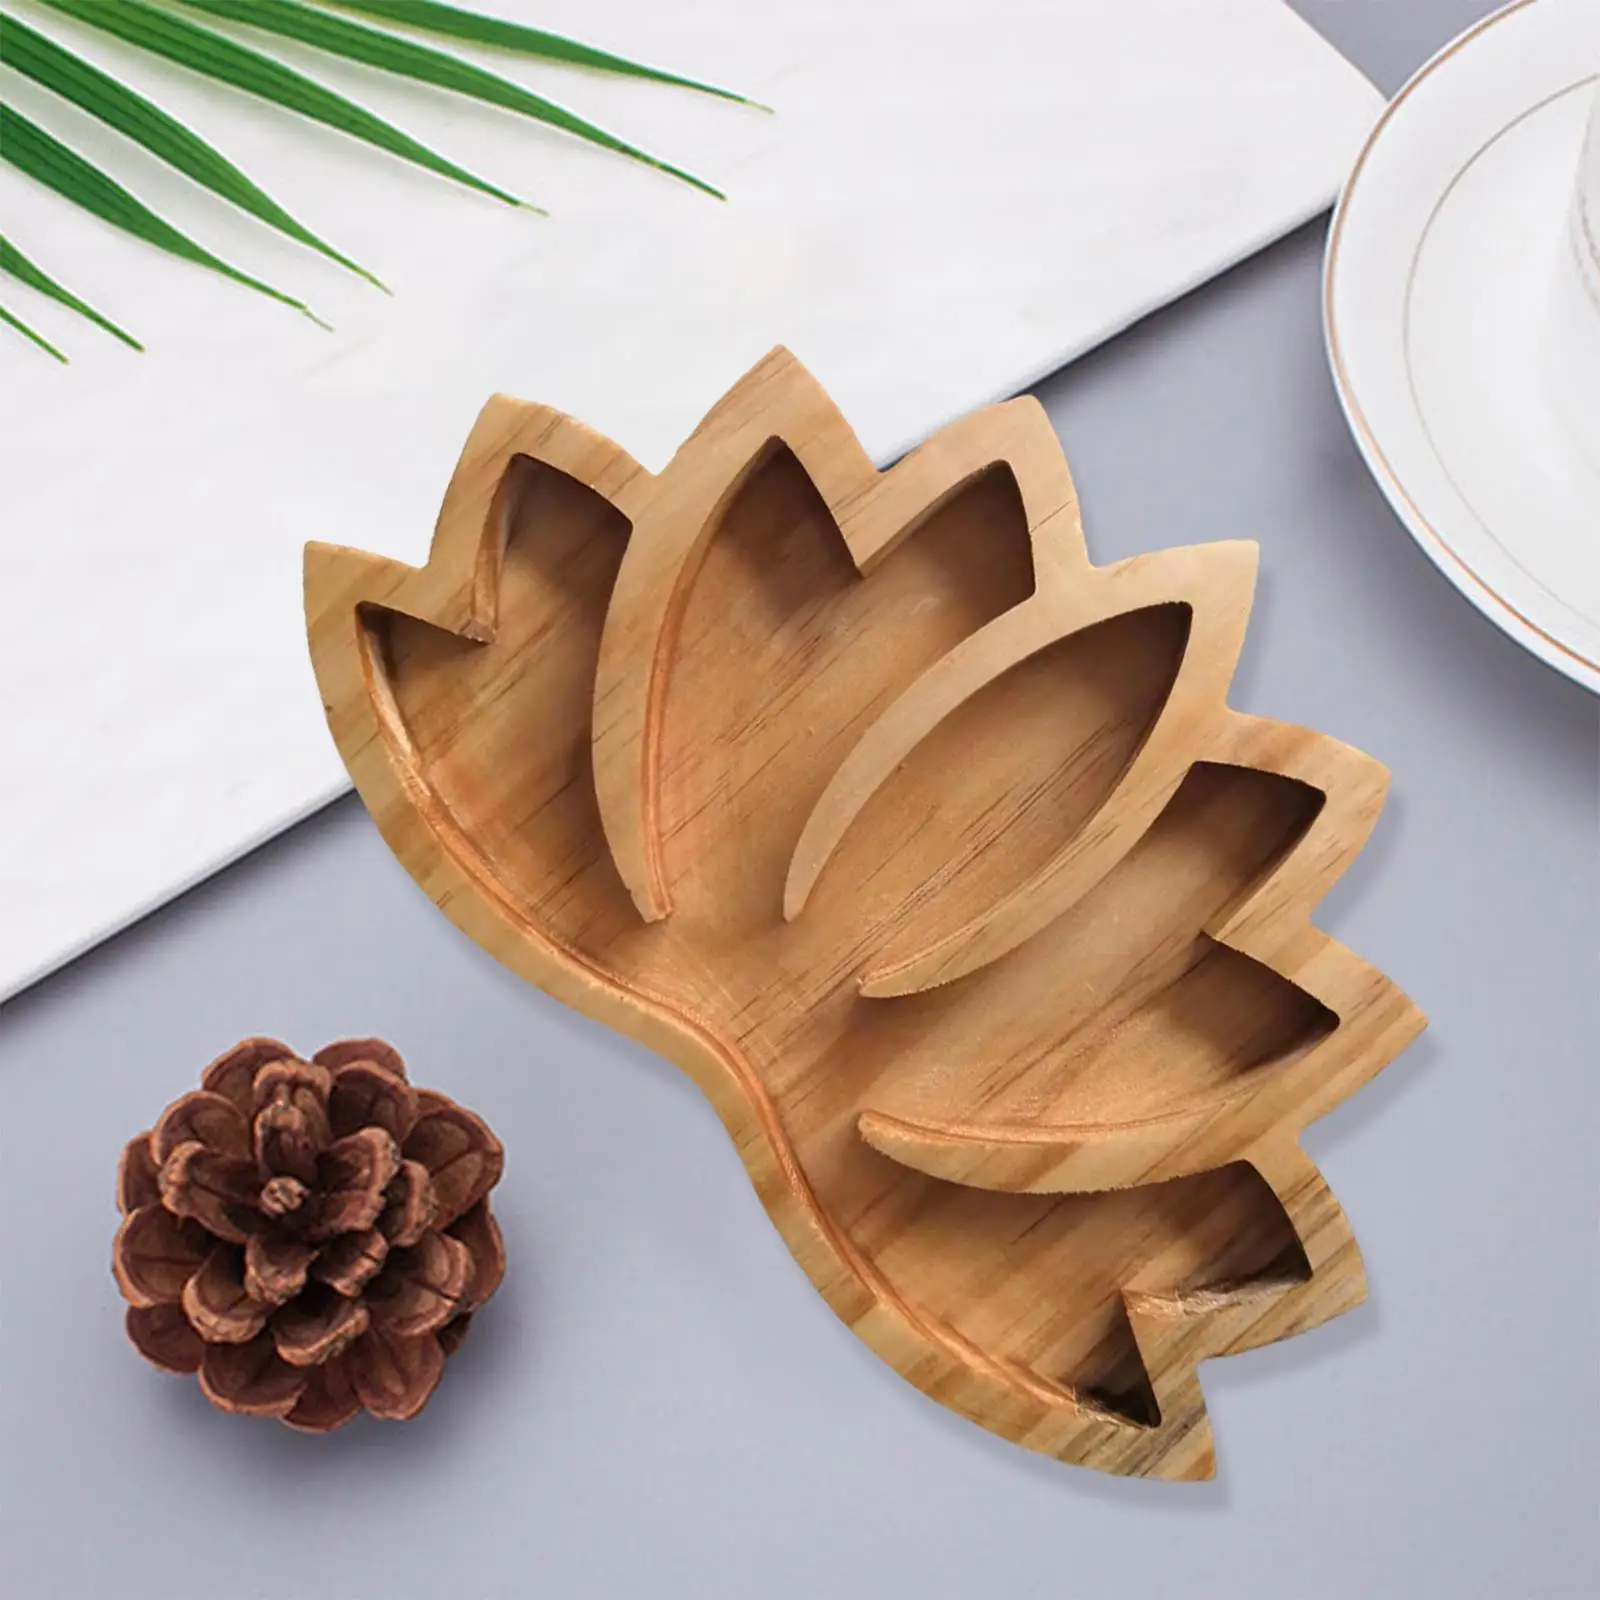 Wood Lotus Crystal Tray Decor Bowl for Perfume Display Vanity Accessories